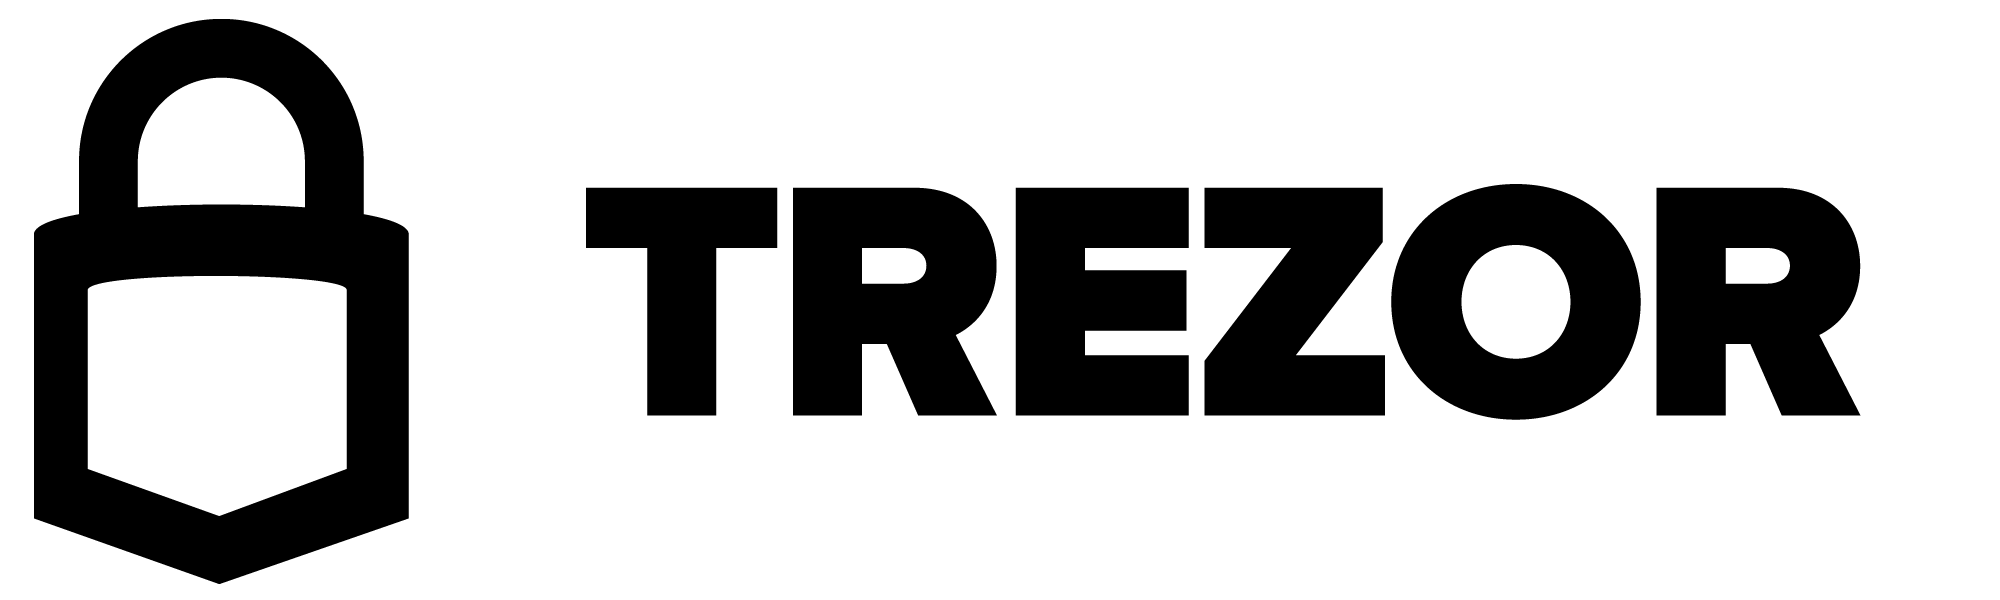 trezor-logo-h.png